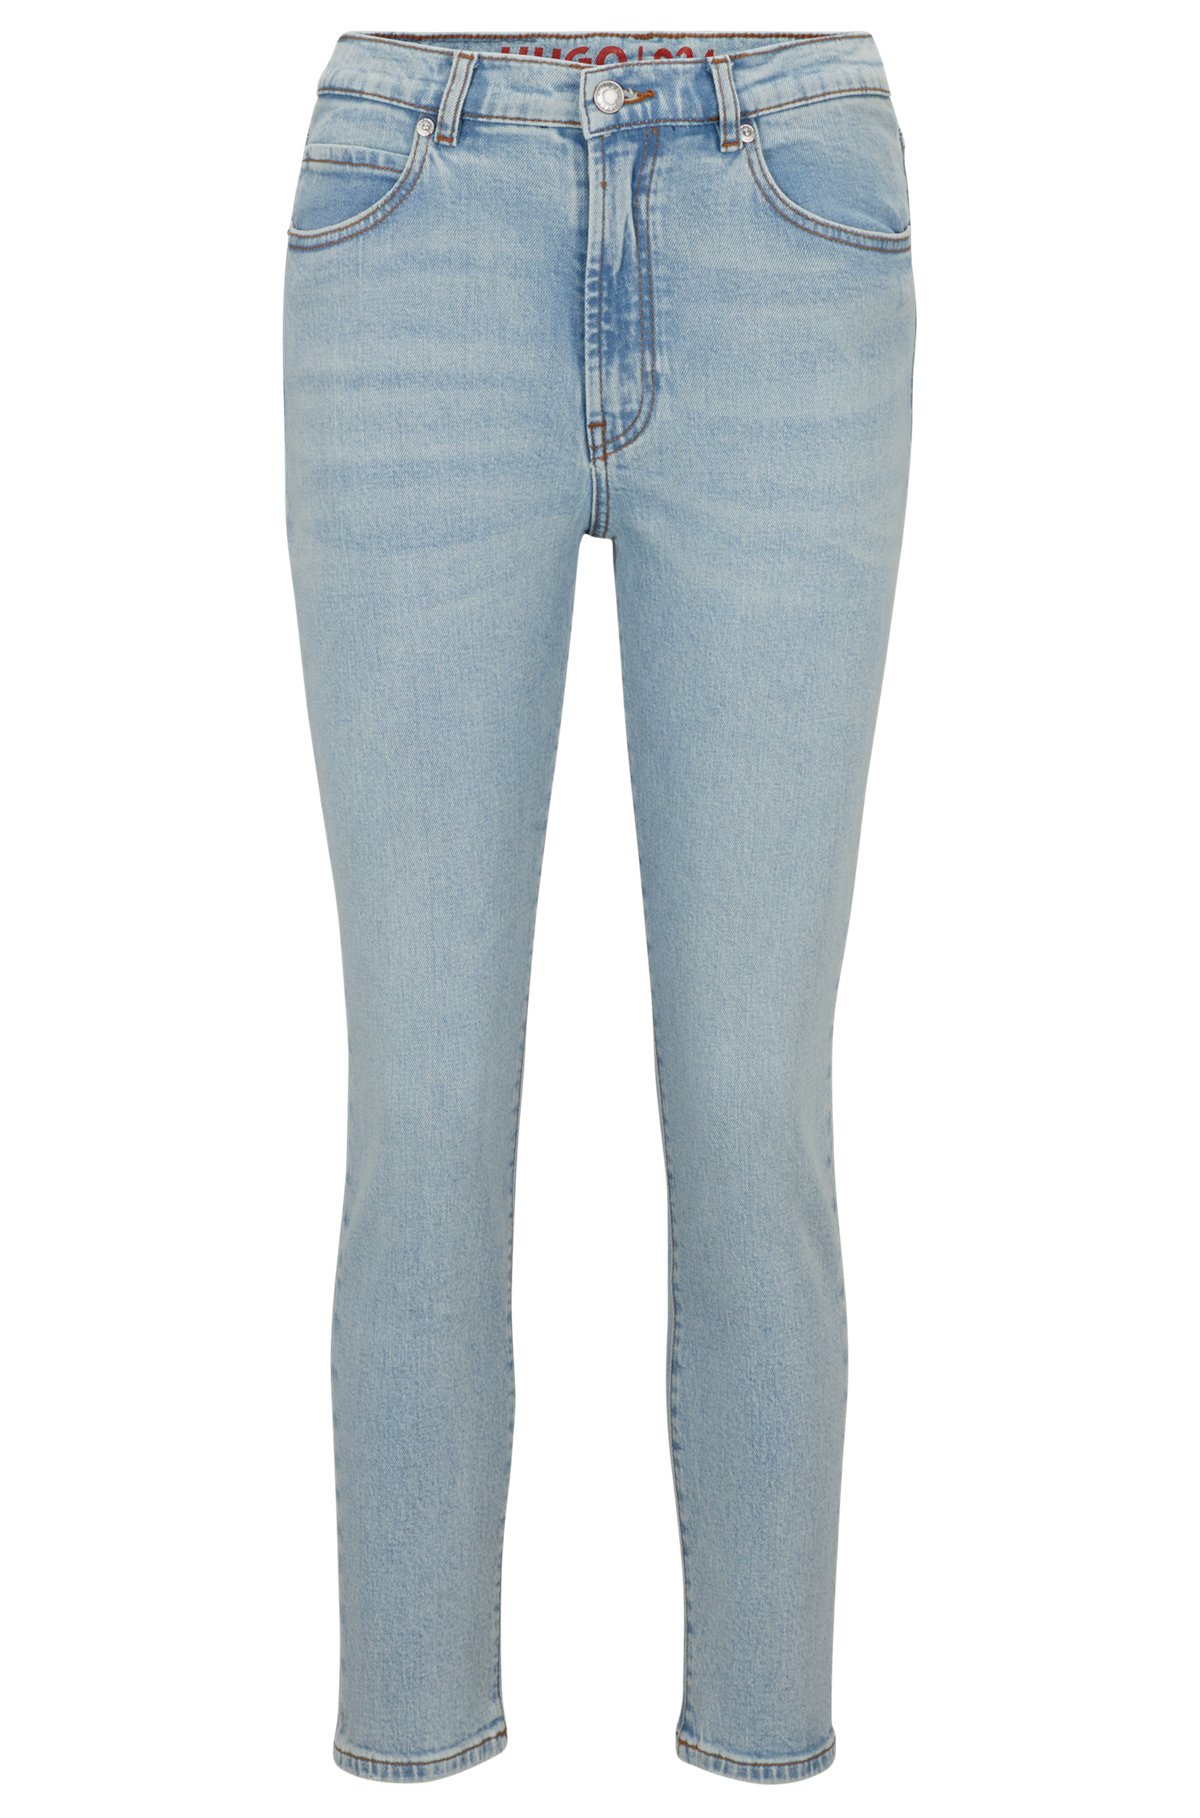 Slim-fit jeans in vintage-wash stretch denim, Turquoise